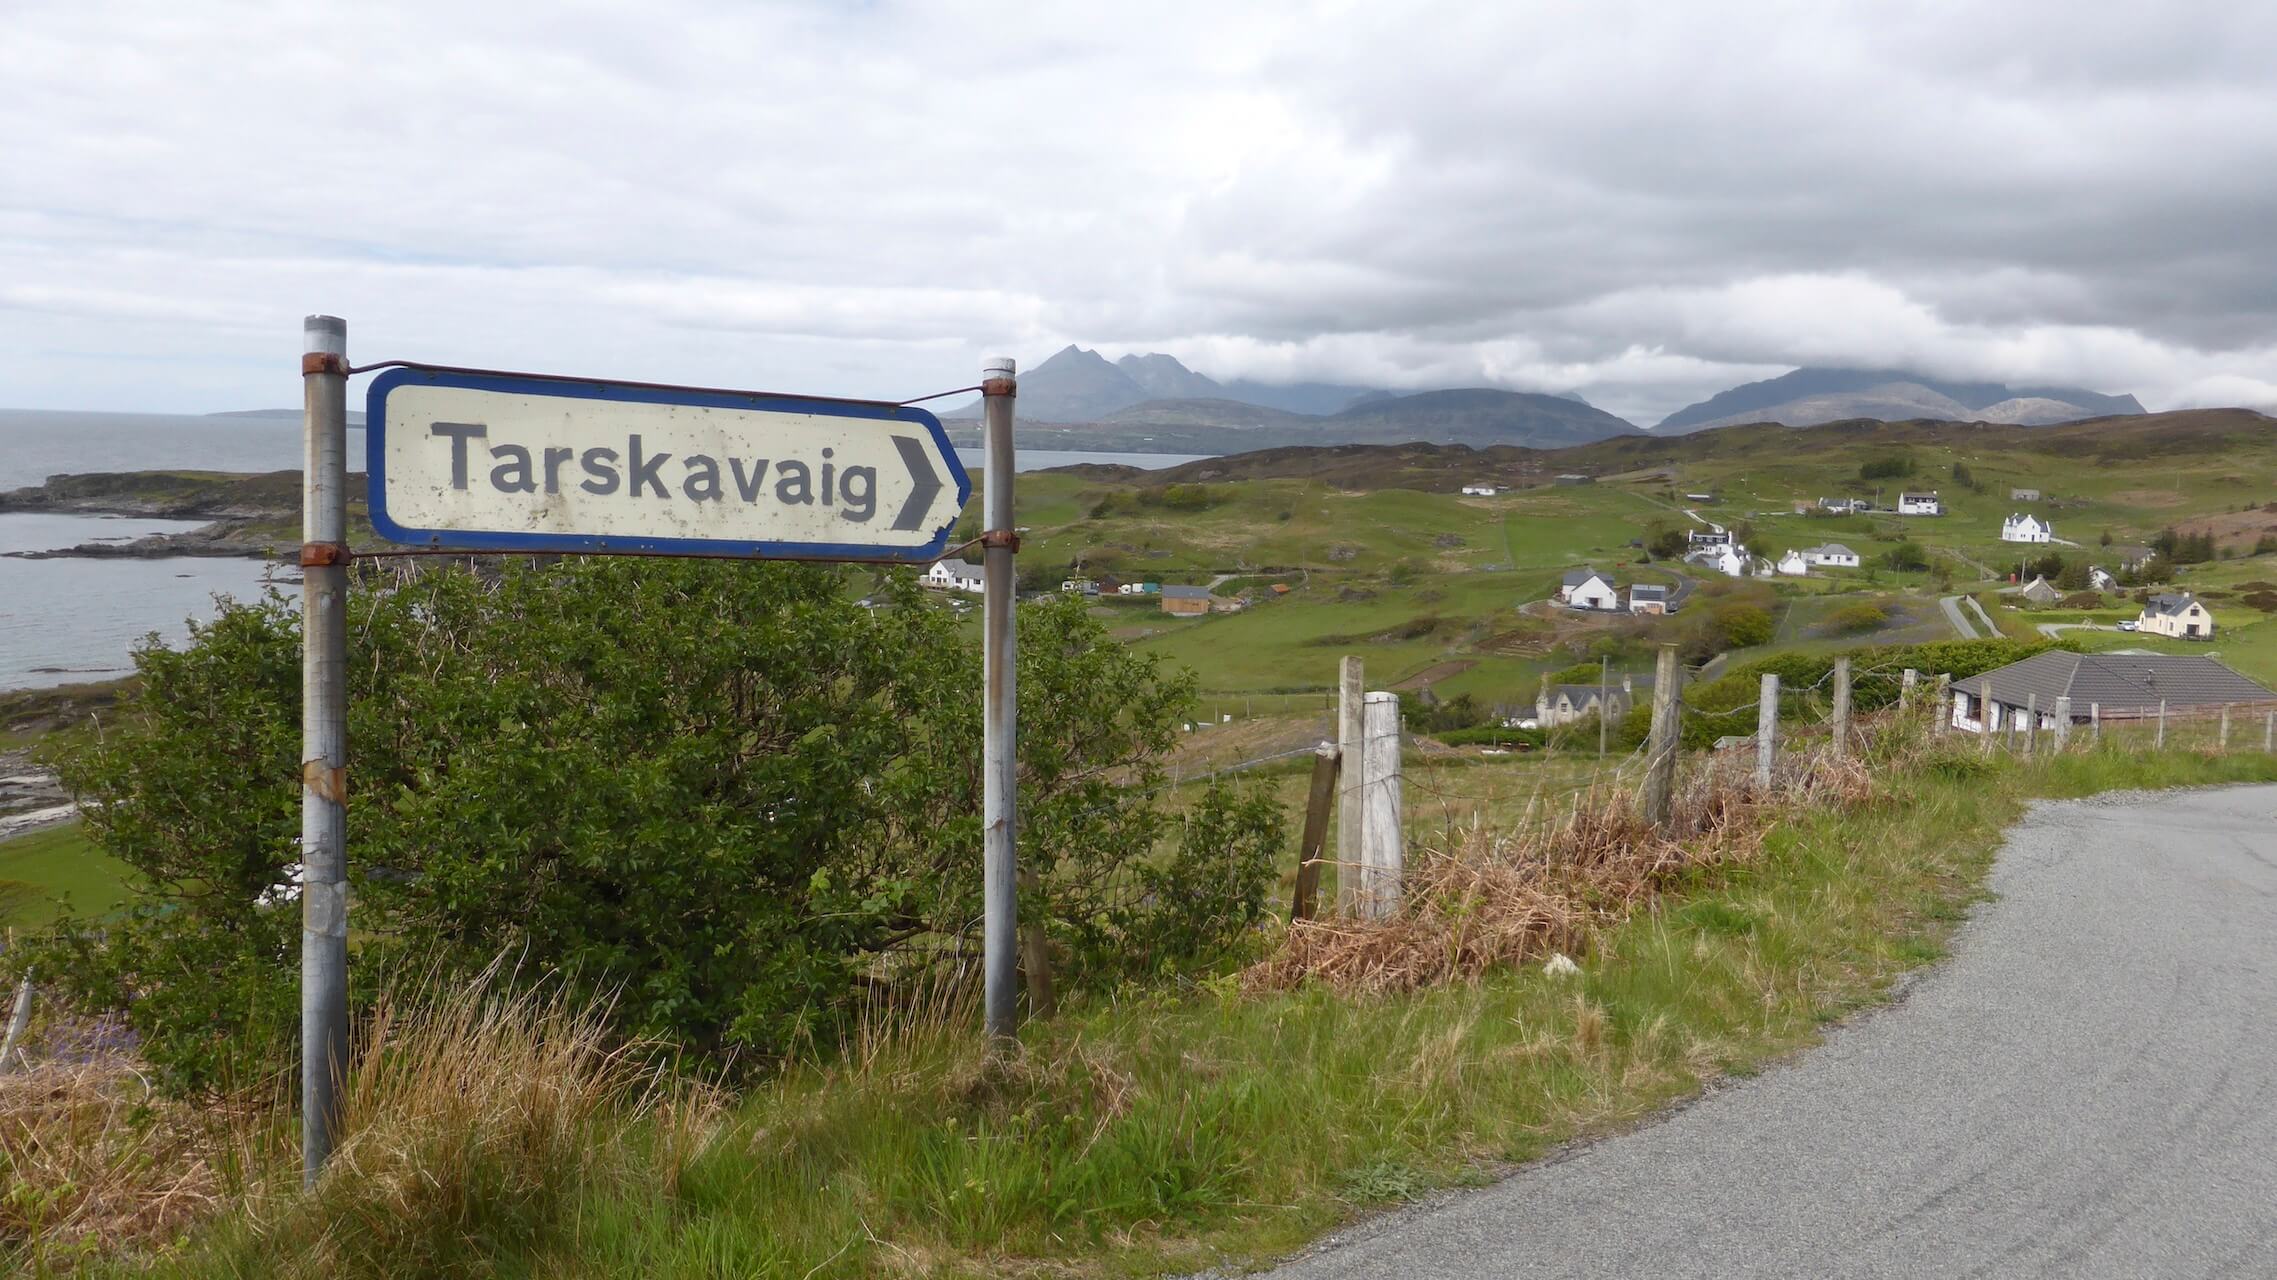 Tarskavaig road sign, Sleat Peninsula, Skye